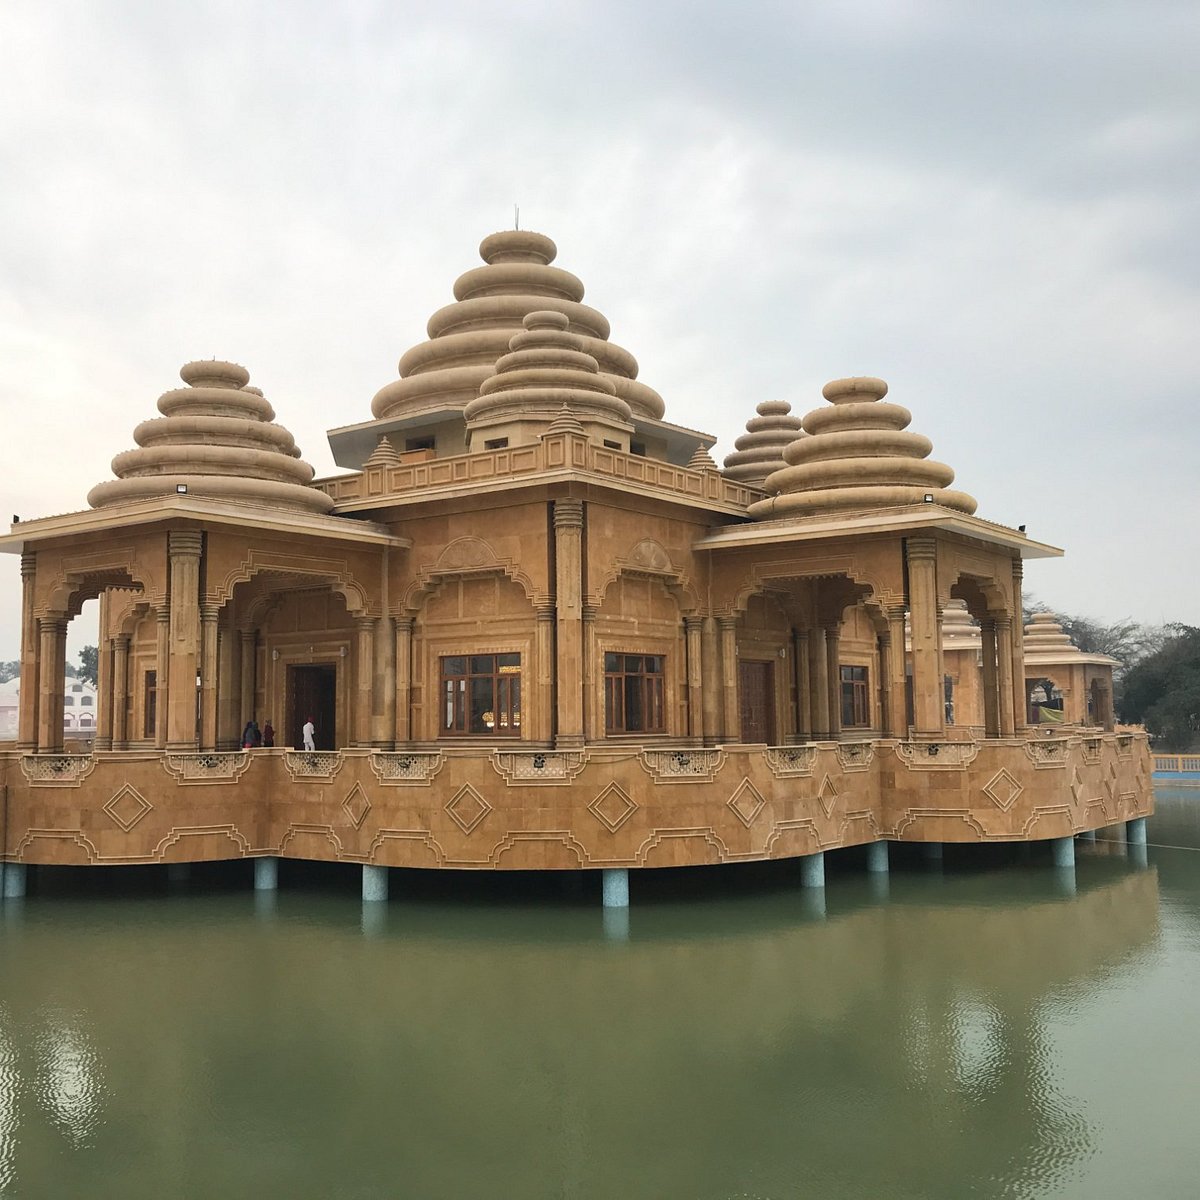 Sri Ram Tirath Temple, Amritsar